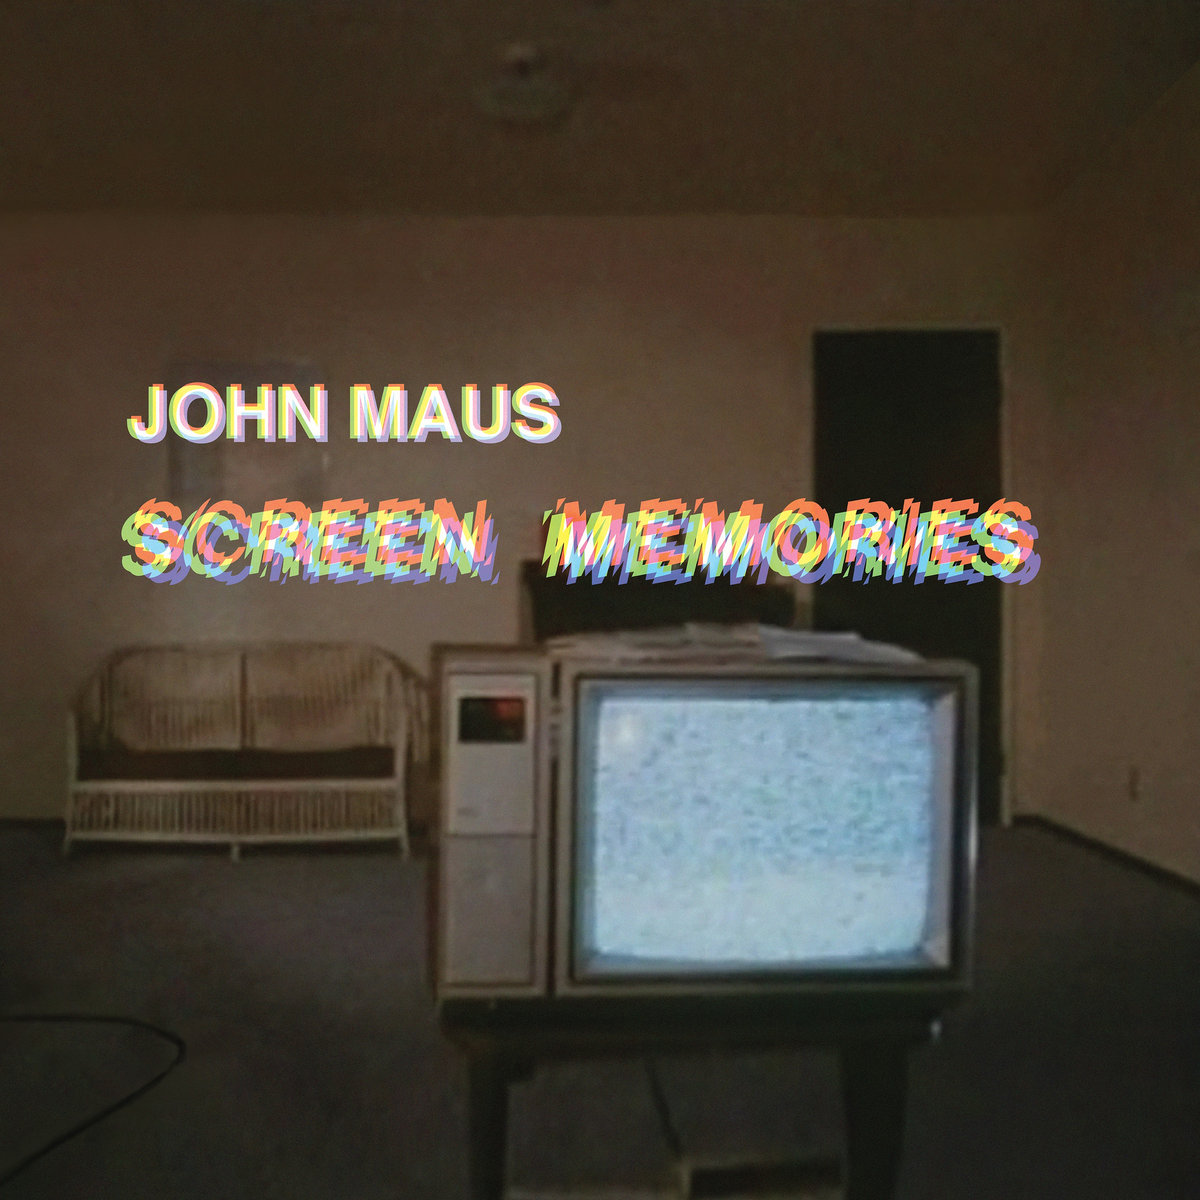 John Maus "Screen Memories" LP